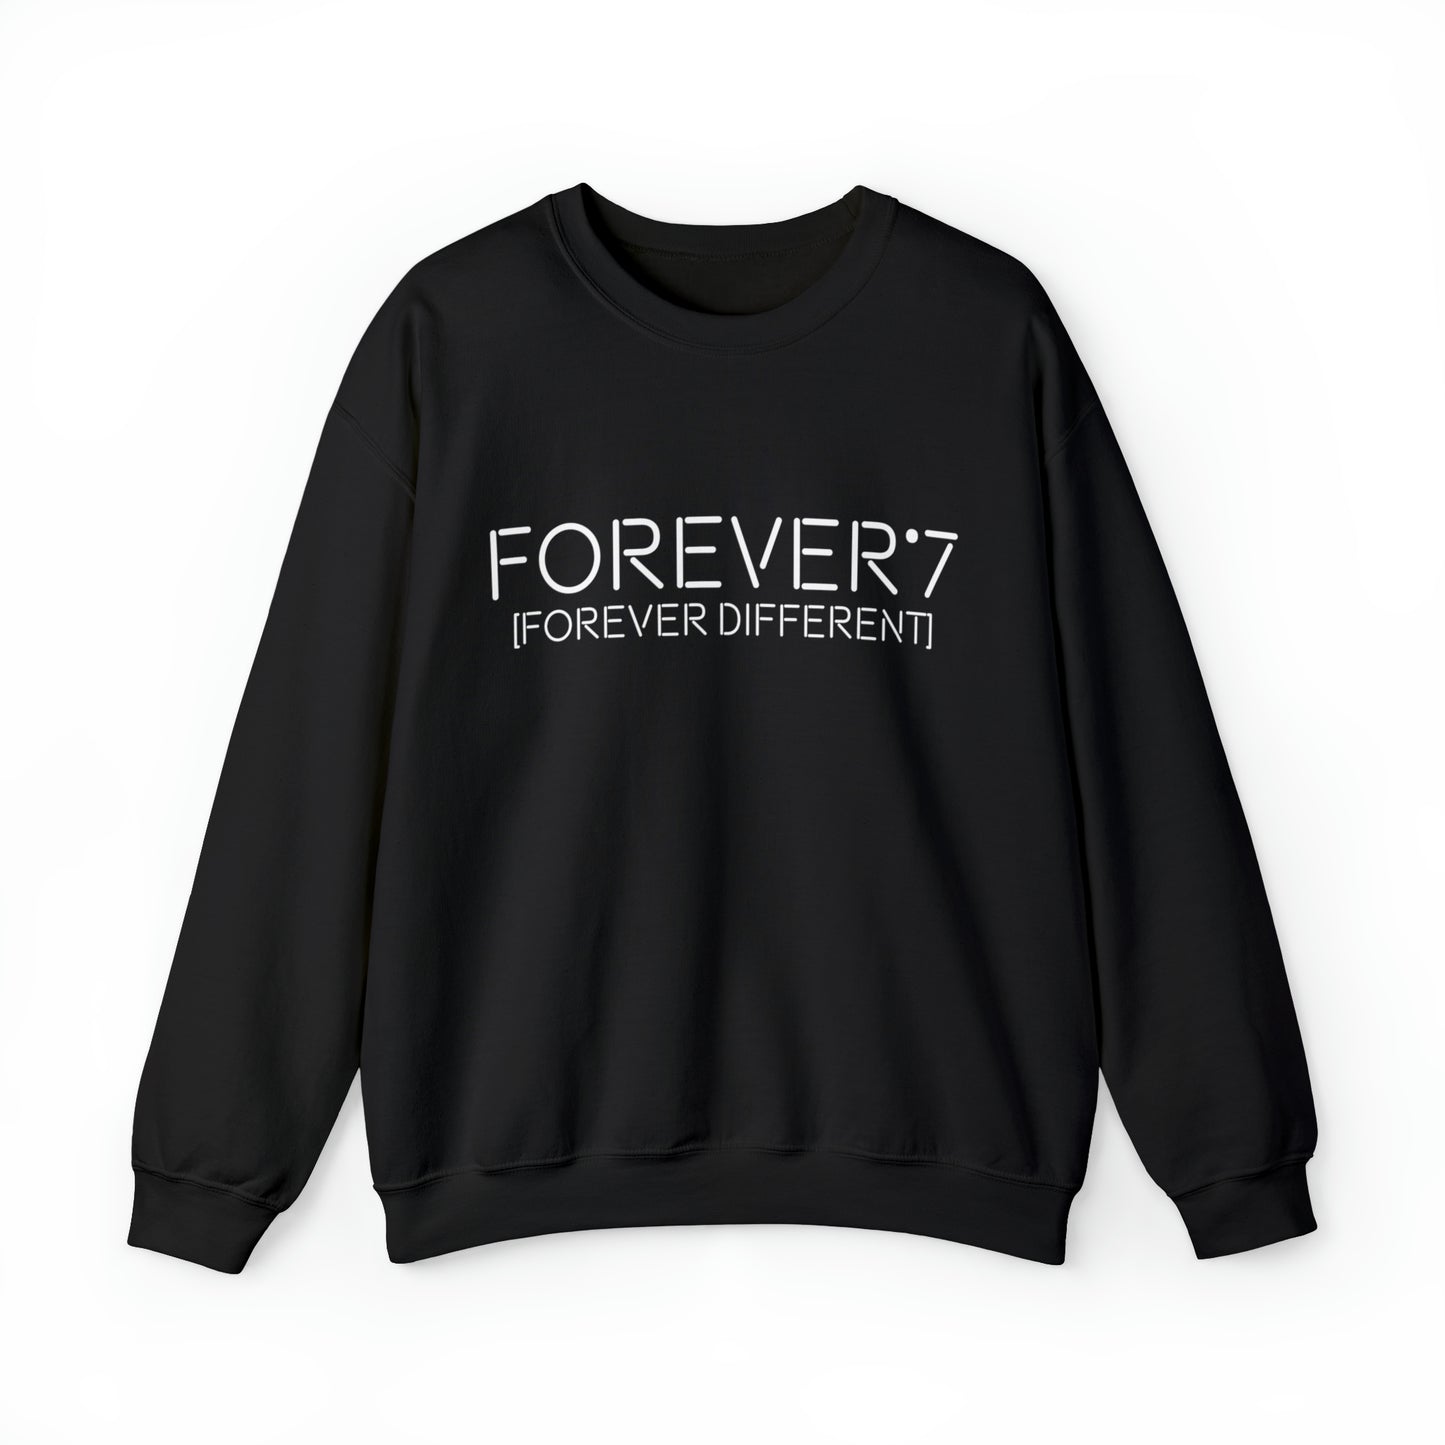 Forever 7 Sweatshirt